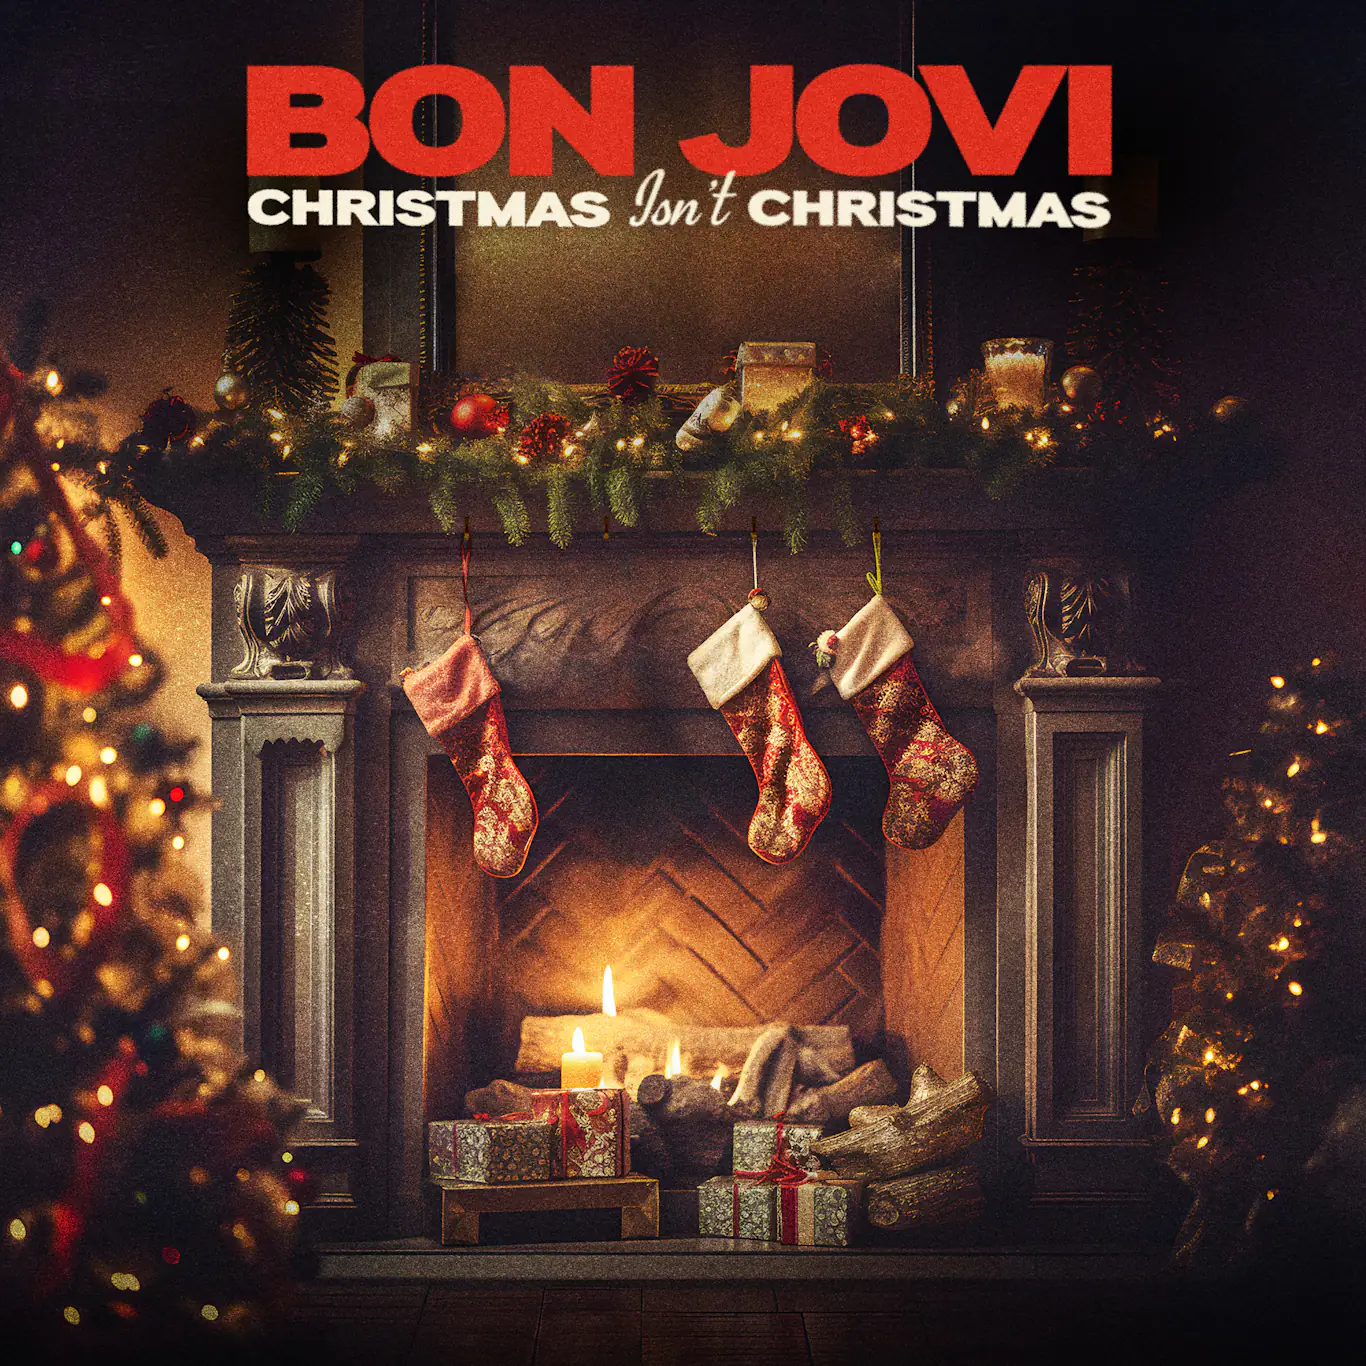 BON JOVI release video for ‘Christmas Isn’t Christmas’, filmed at Santa’s Pub!